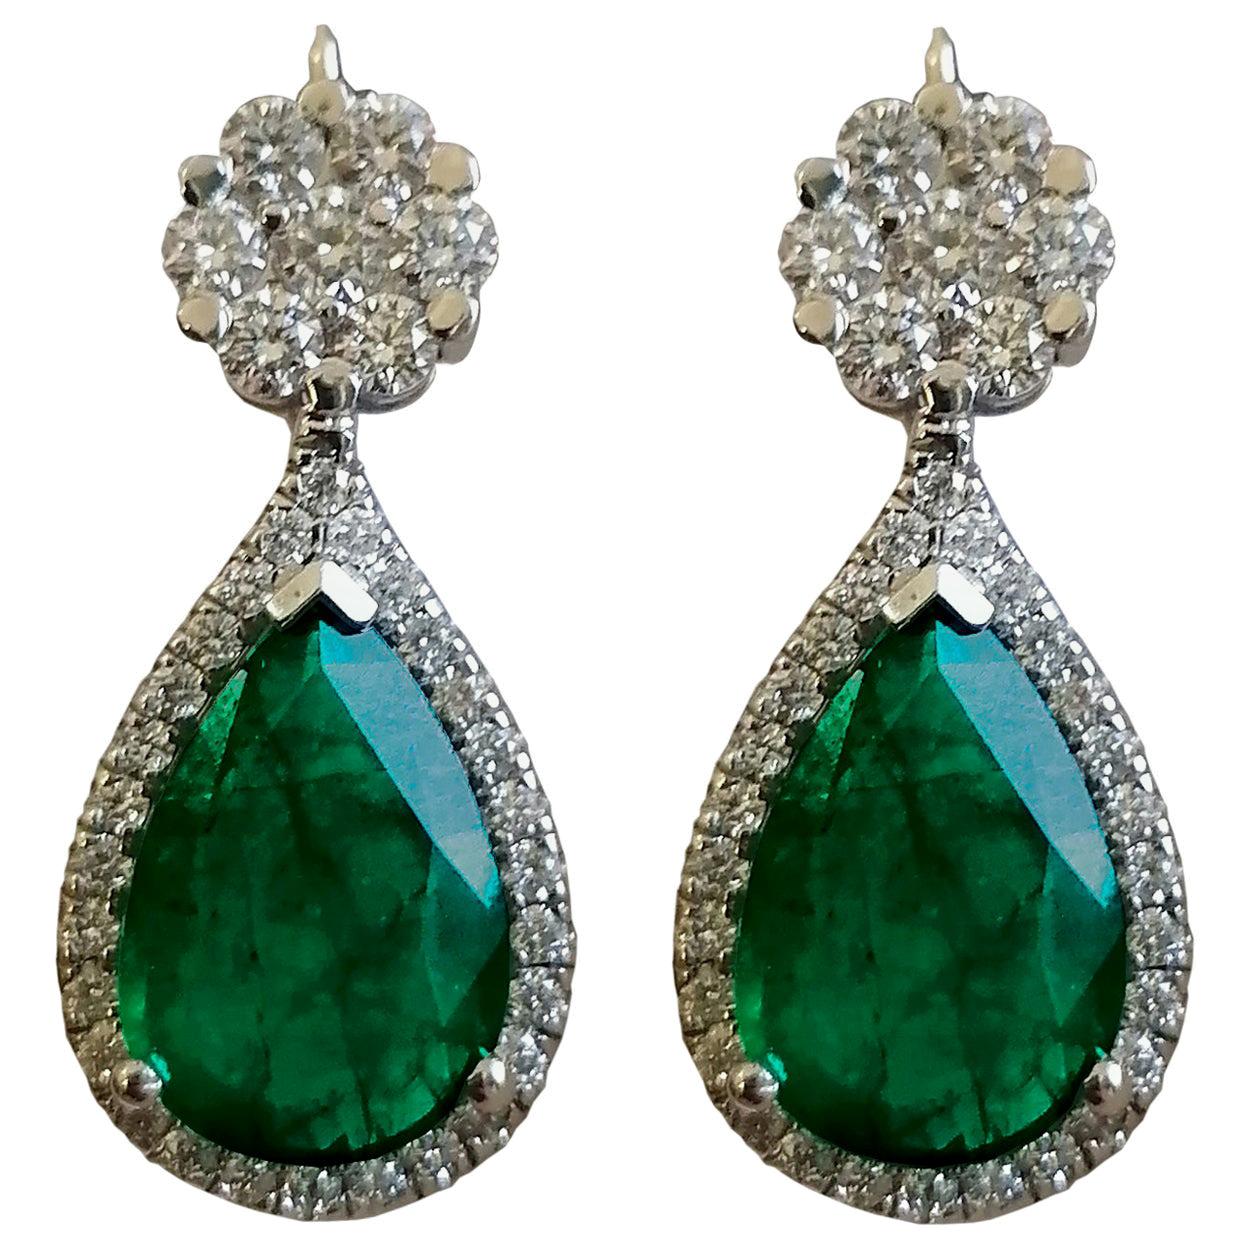 7.10 Carat Natural Emerald Diamond Dangle Flower Earrings 18 Carat White Gold